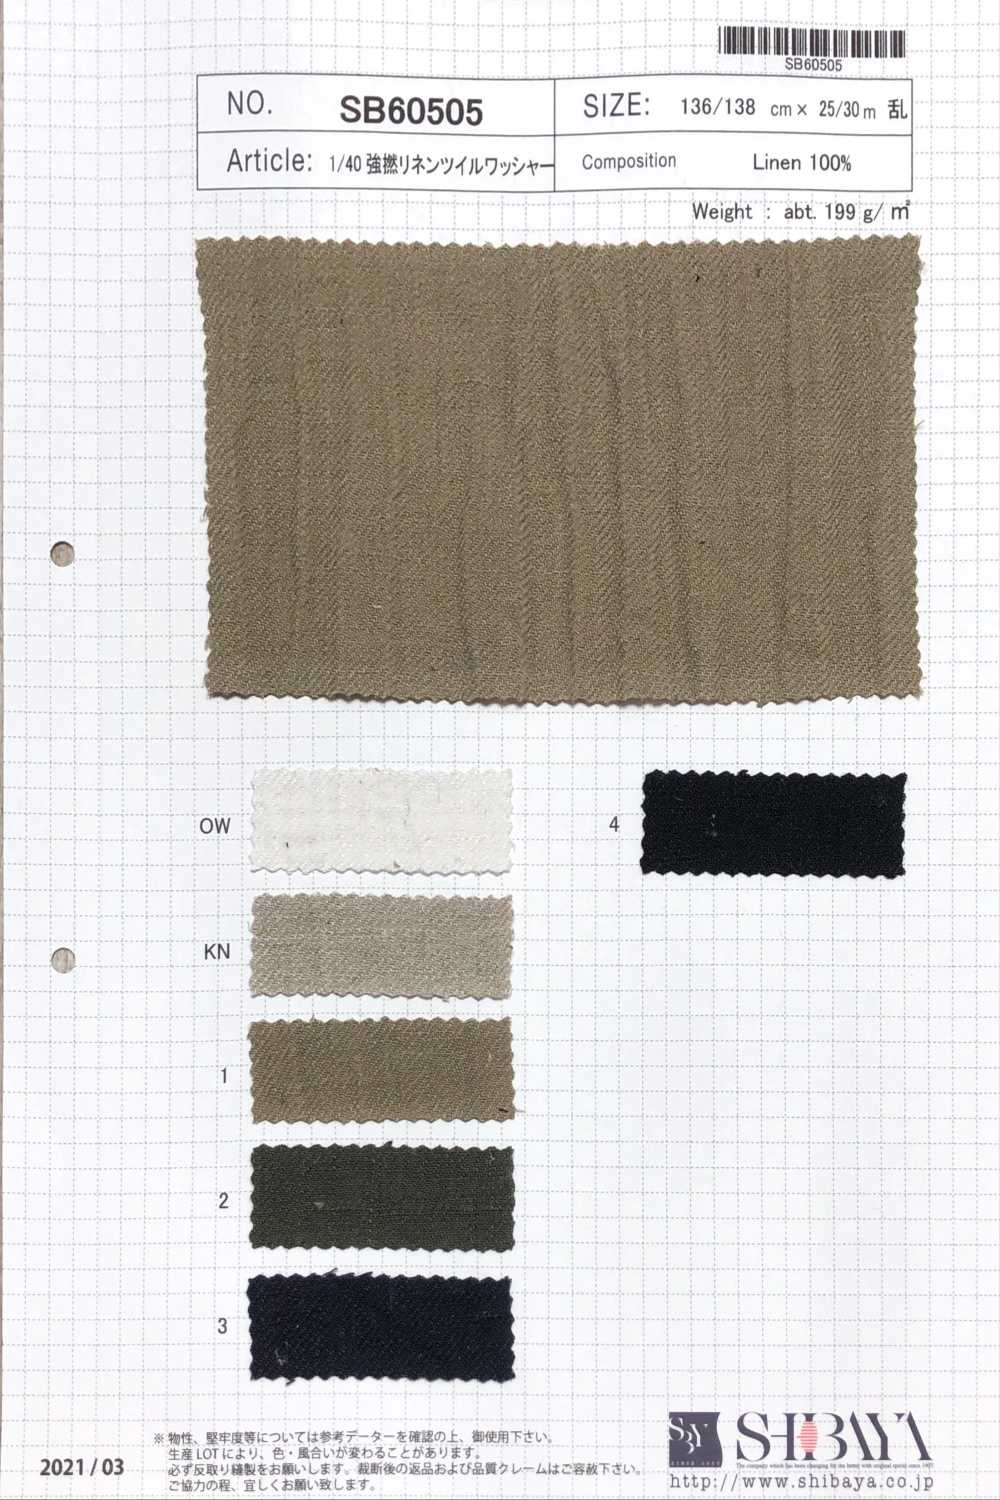 SB60505 1/40 Strong Twist Linen Twill Washer[Textile / Fabric] SHIBAYA